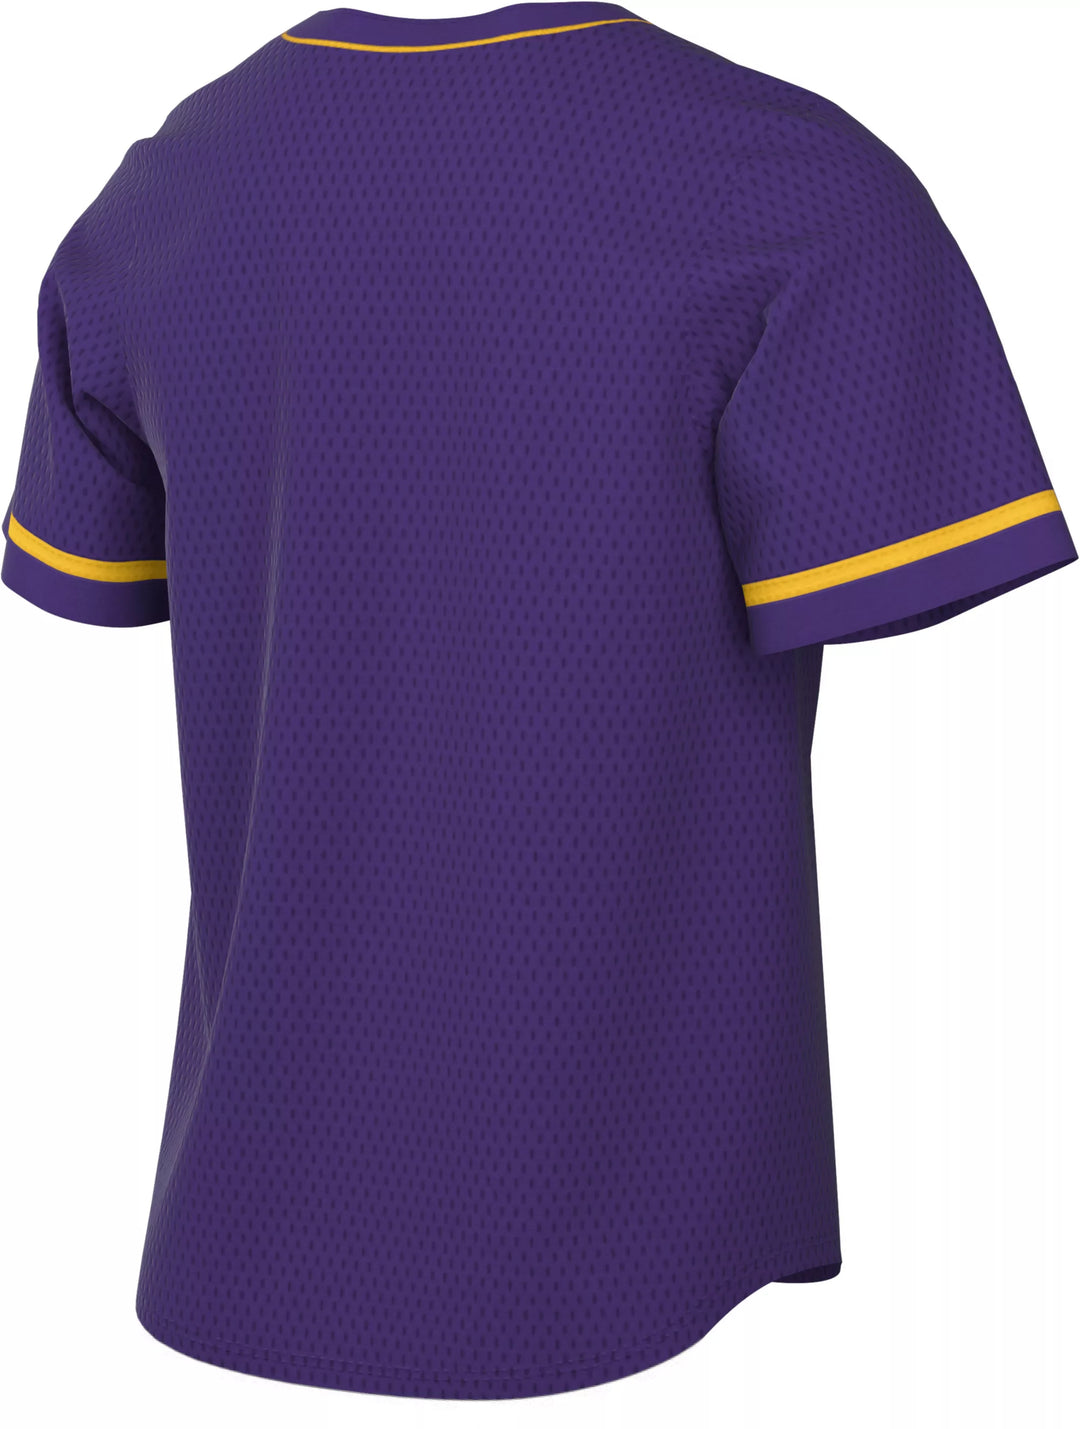 Los Angeles Lakers Purple Jersey Top